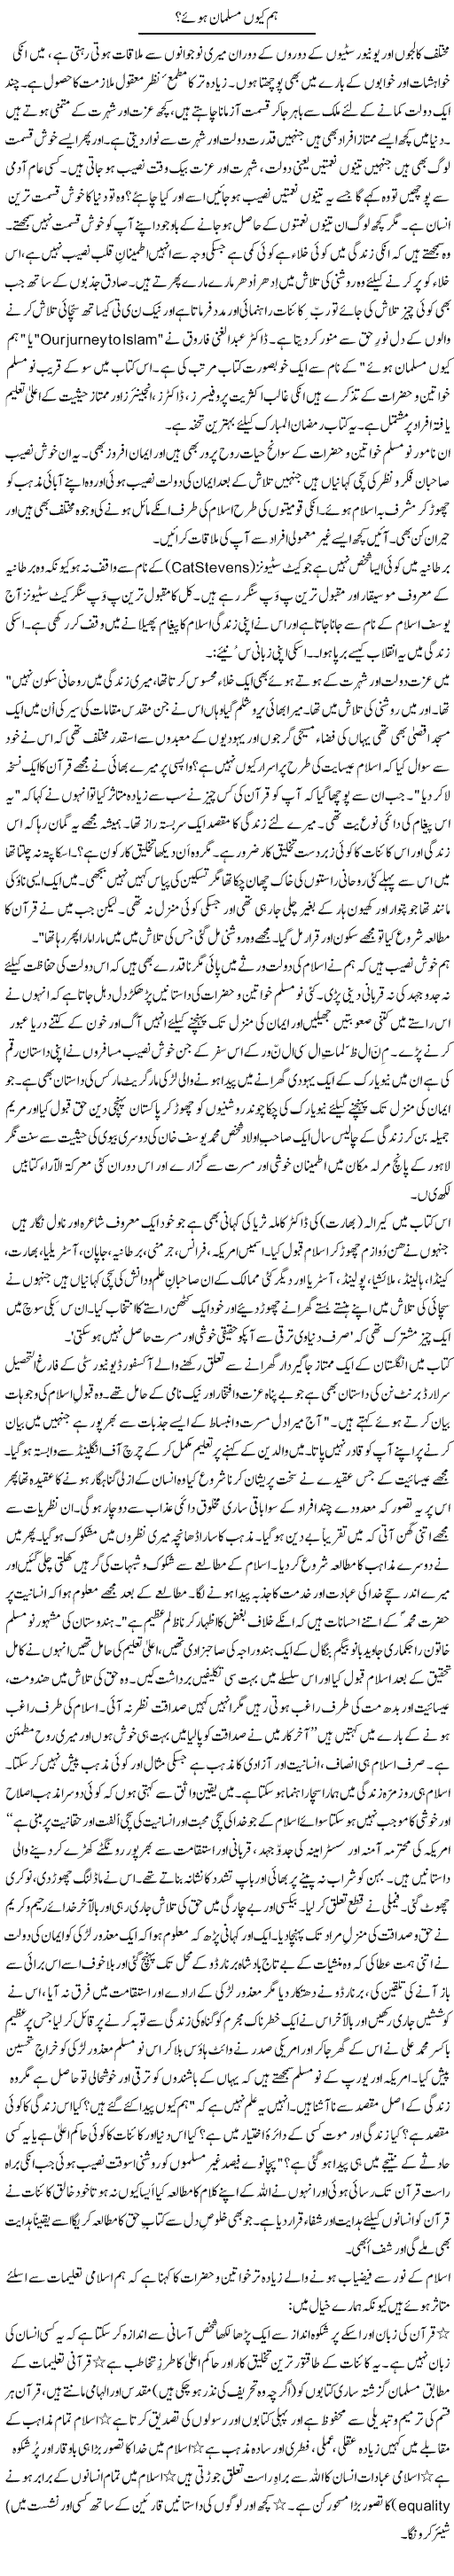 Hum Kyun Musalman Hue? | Zulfiqar Ahmed Cheema | Daily Urdu Columns